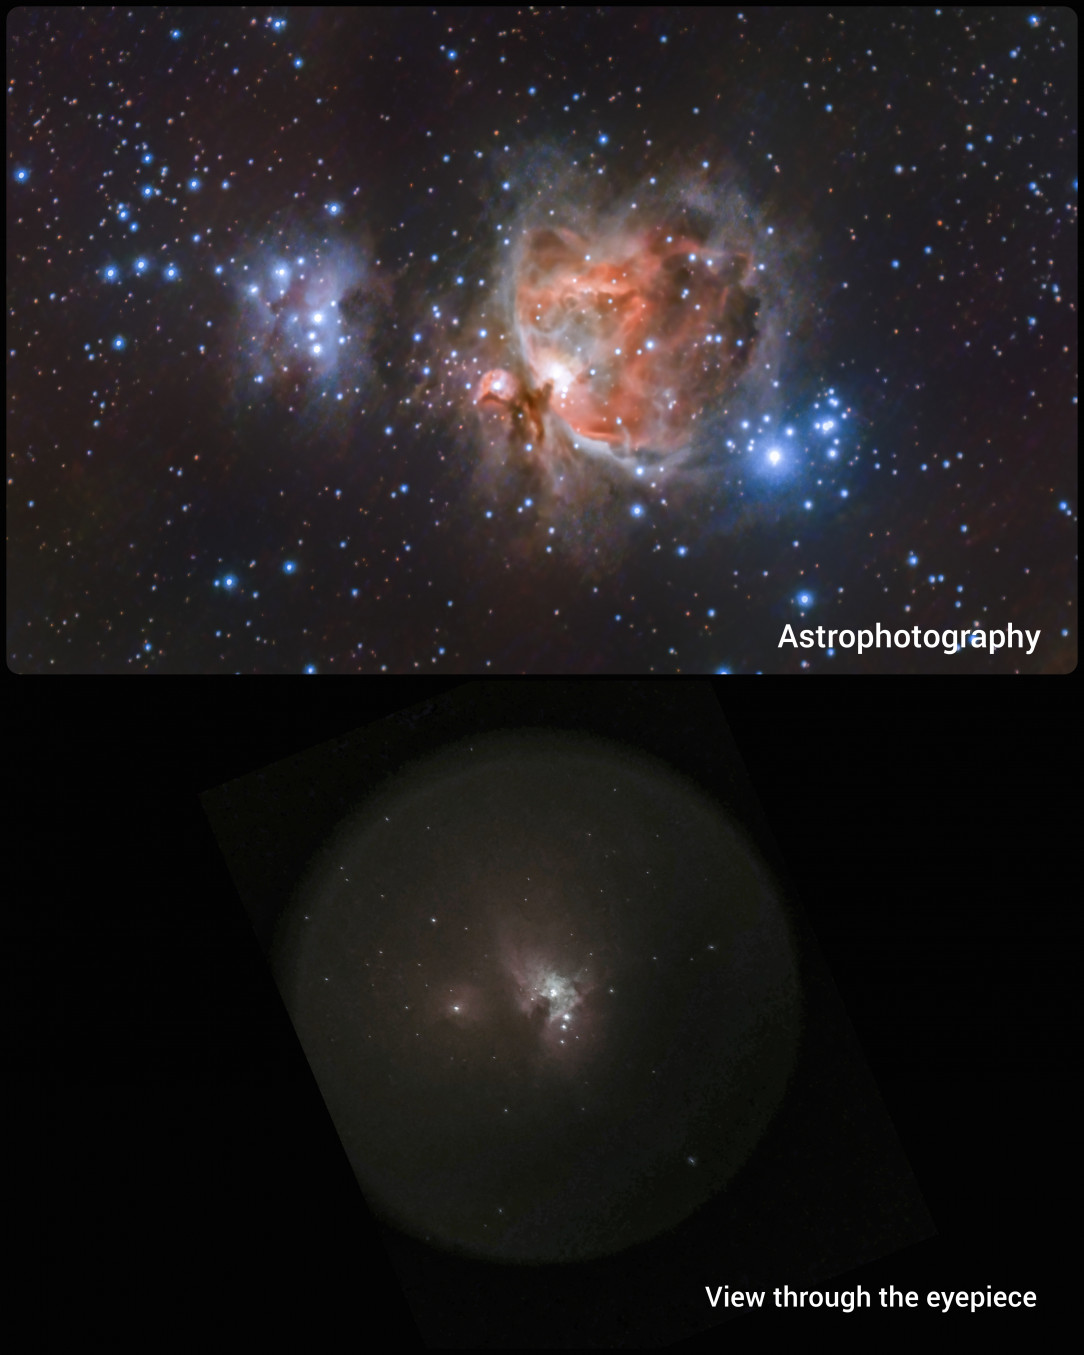 Astrophotography vs. visual astronomy, a comparison